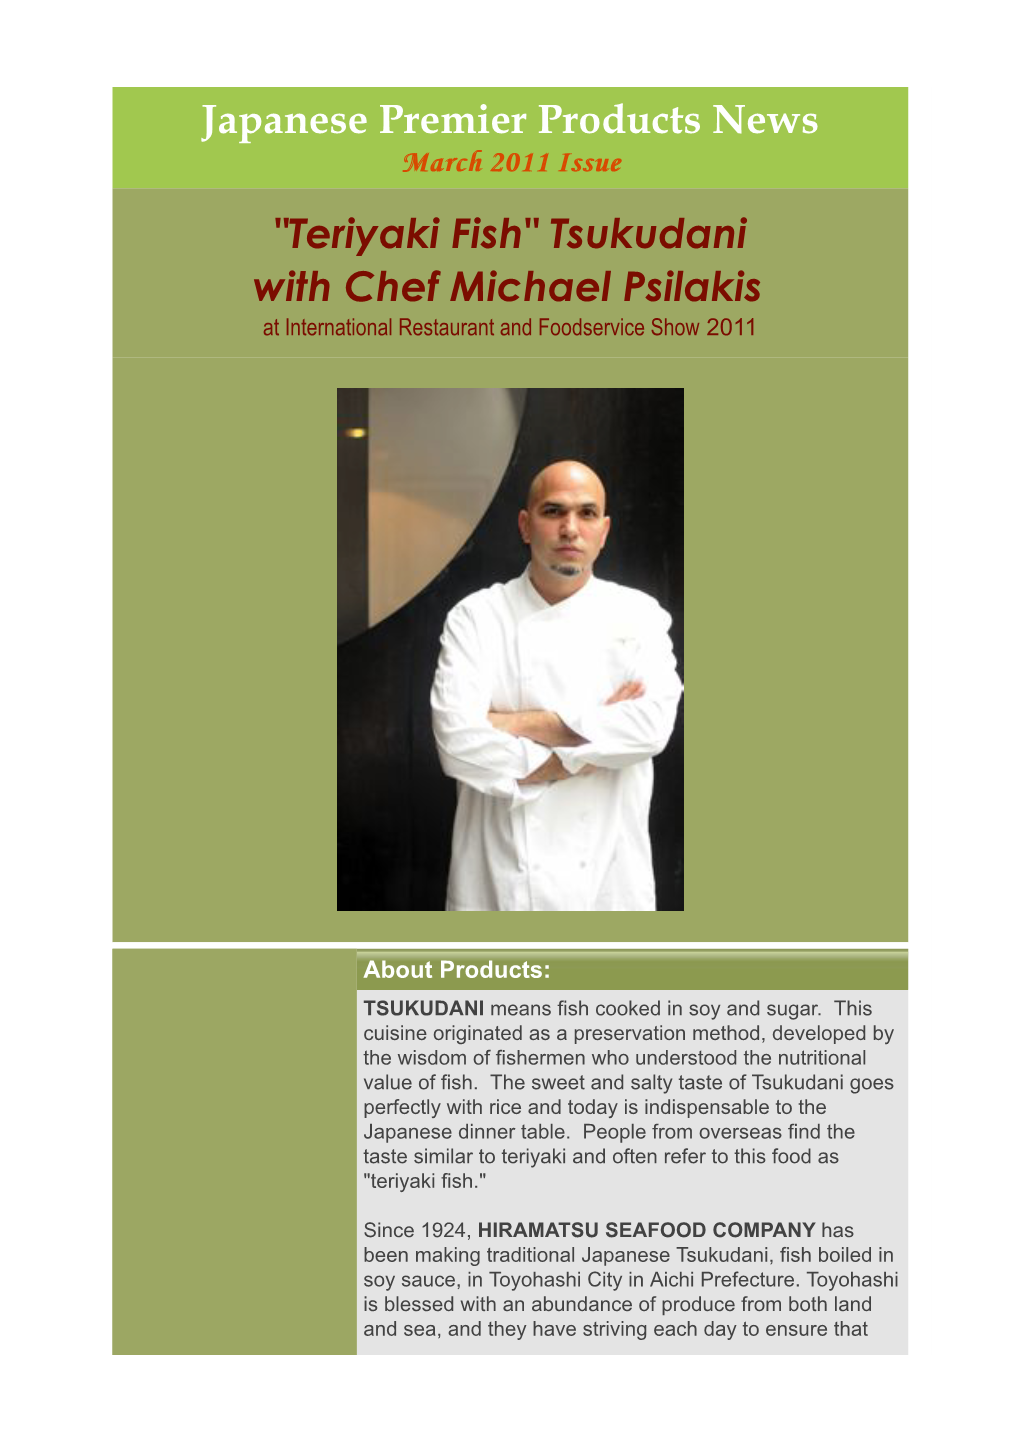 "Teriyaki Fish" Tsukudani with Chef Michael Psilakis at International Restaurant and Foodservice Show 2011